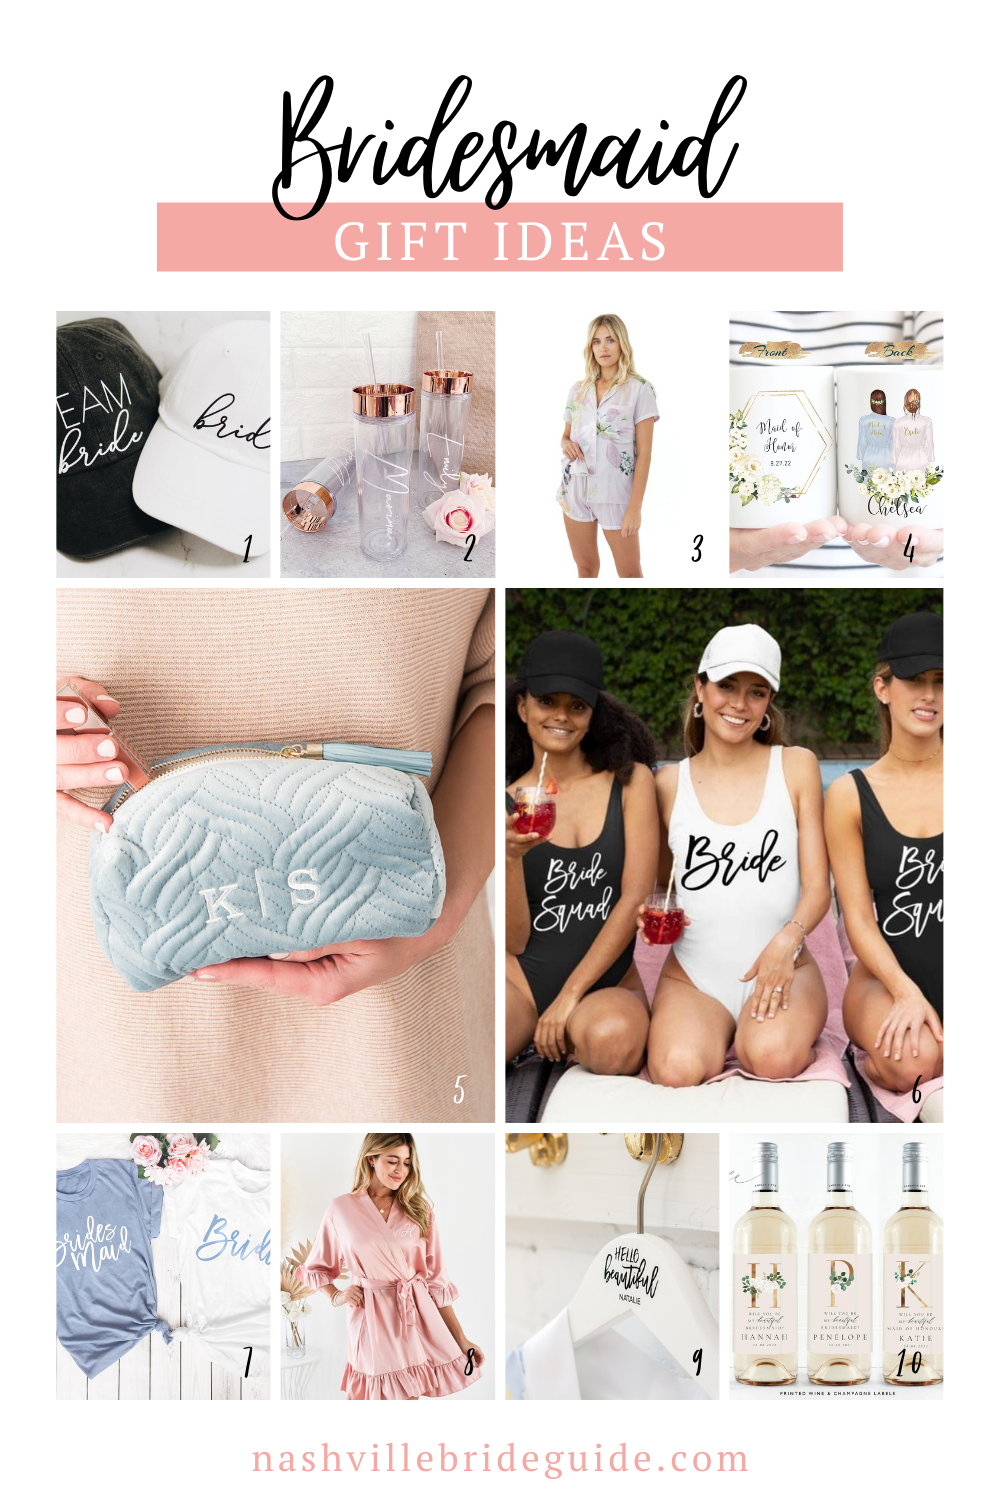 Super cute bridesmaid gift ideas featured on Nashville Bride Guide